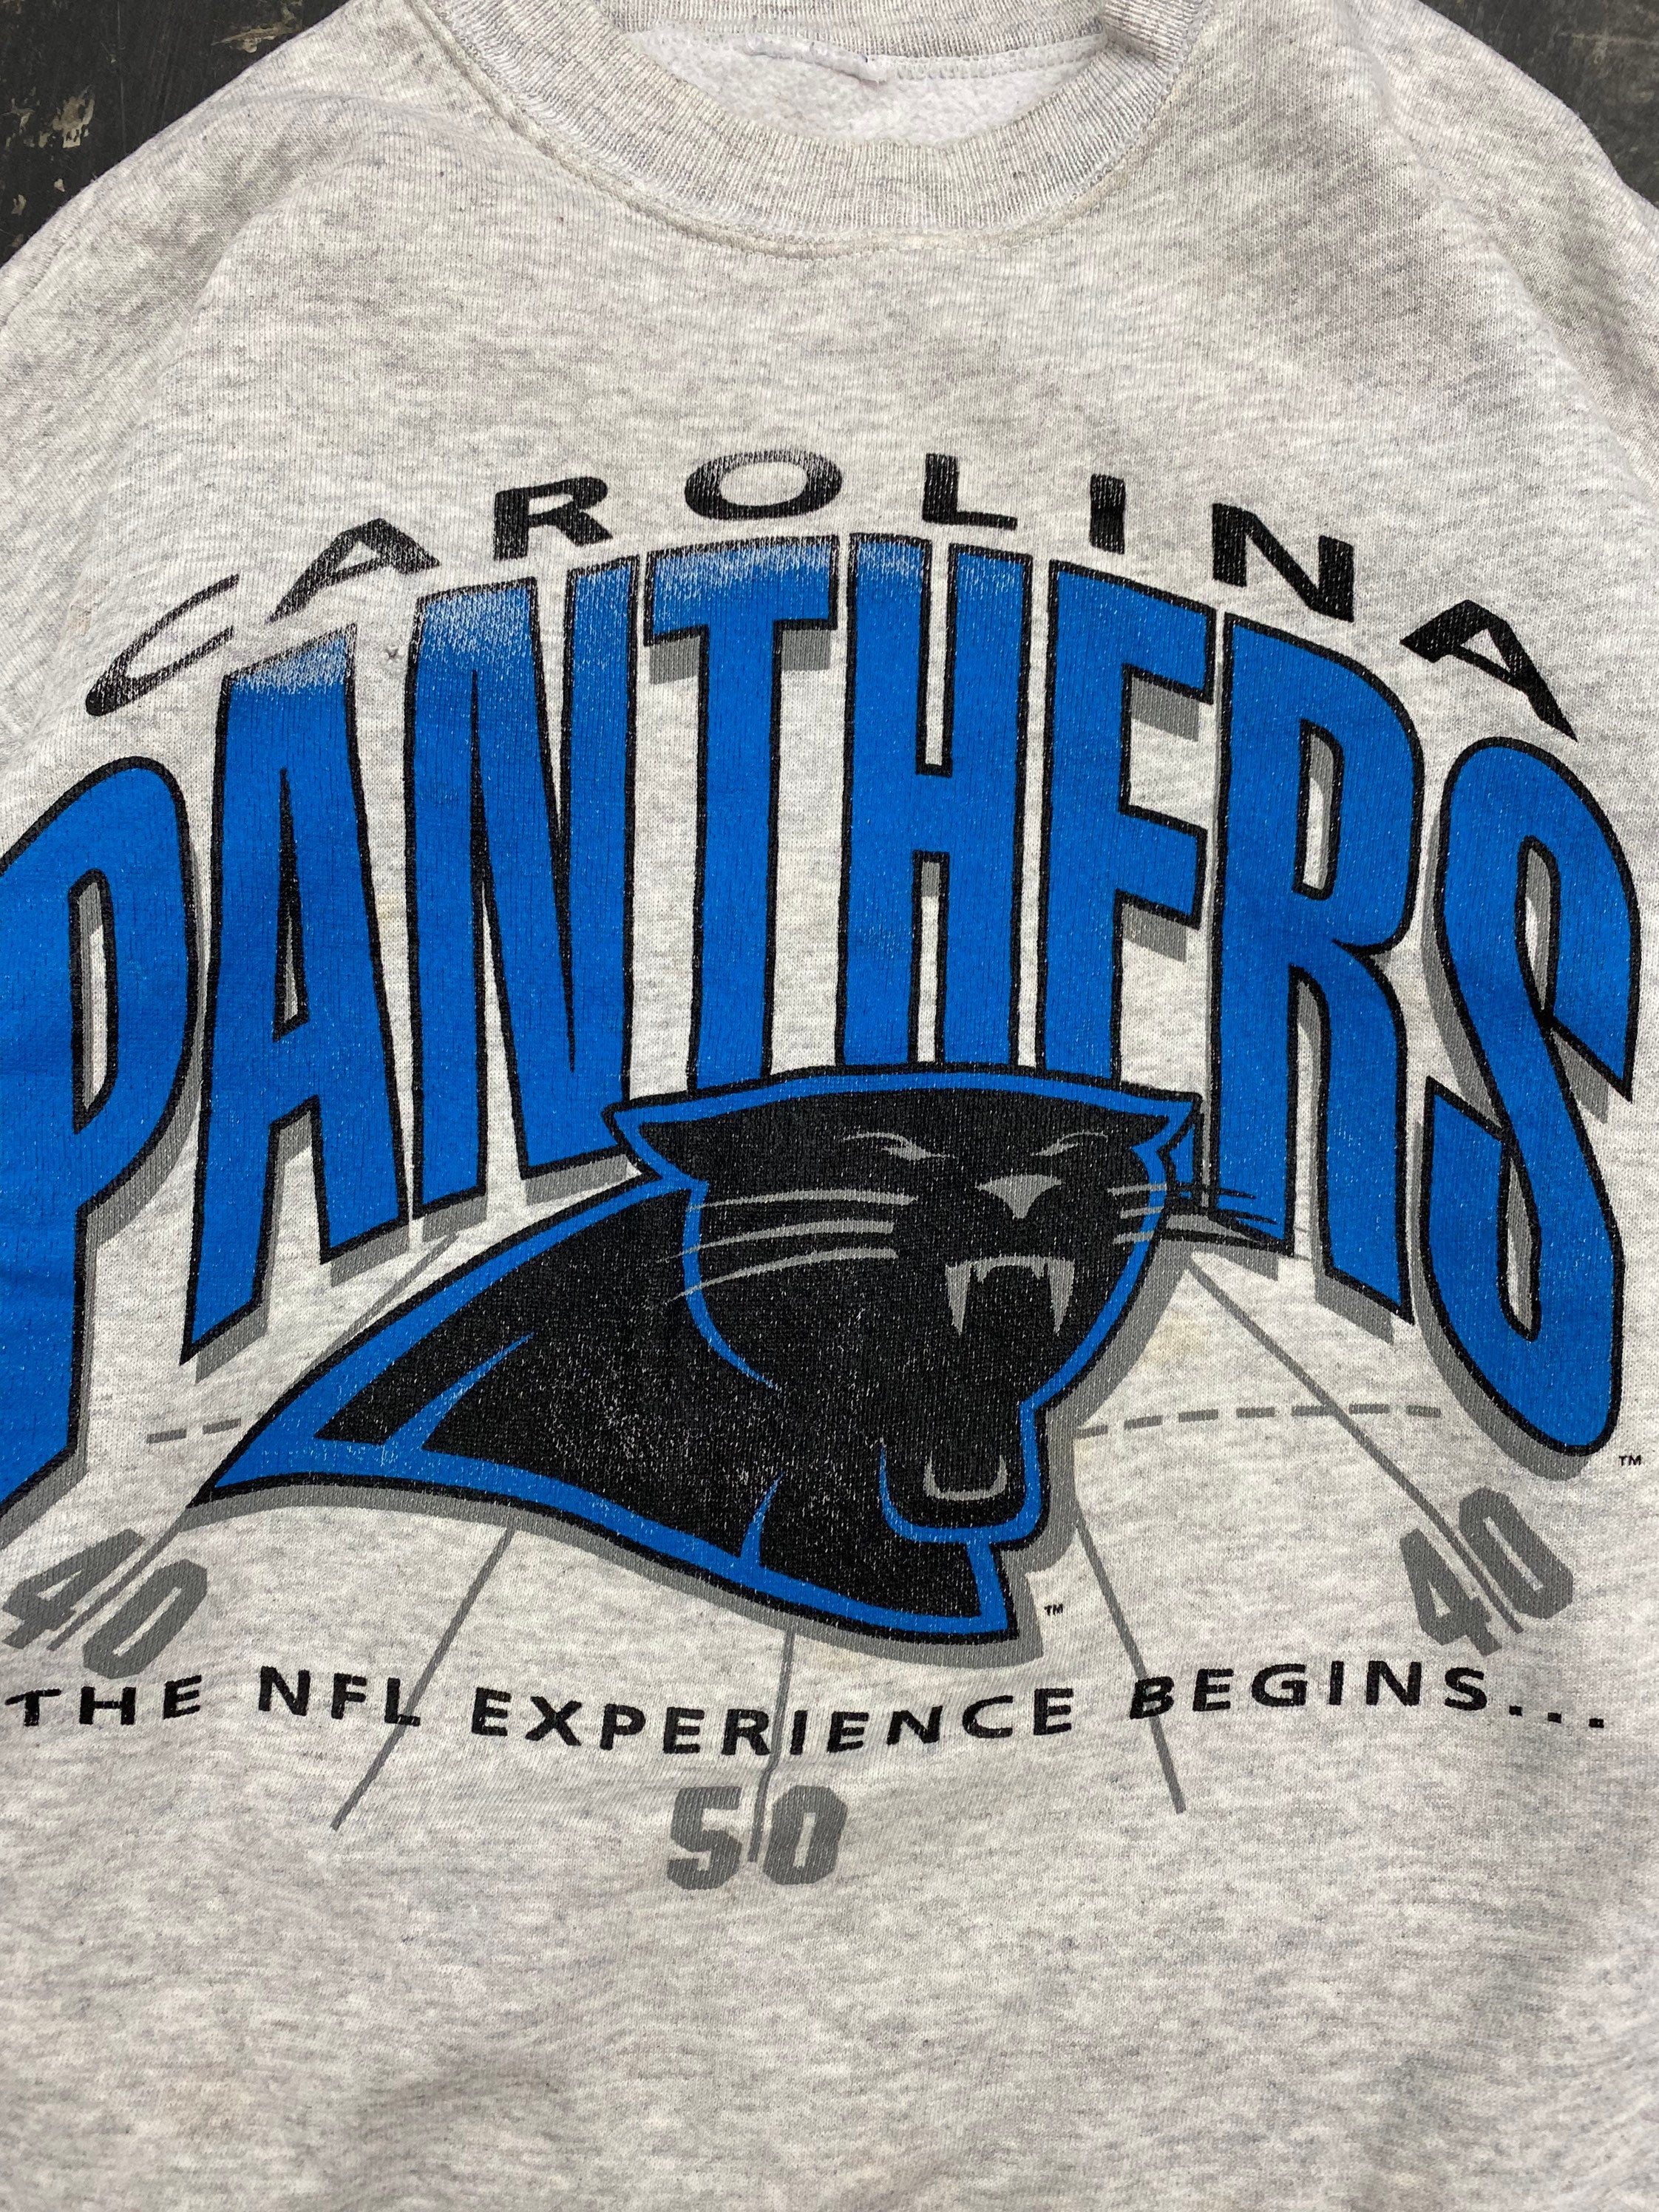 Vintage 90s Carolina Panthers NFL Sweatshirt Size Small